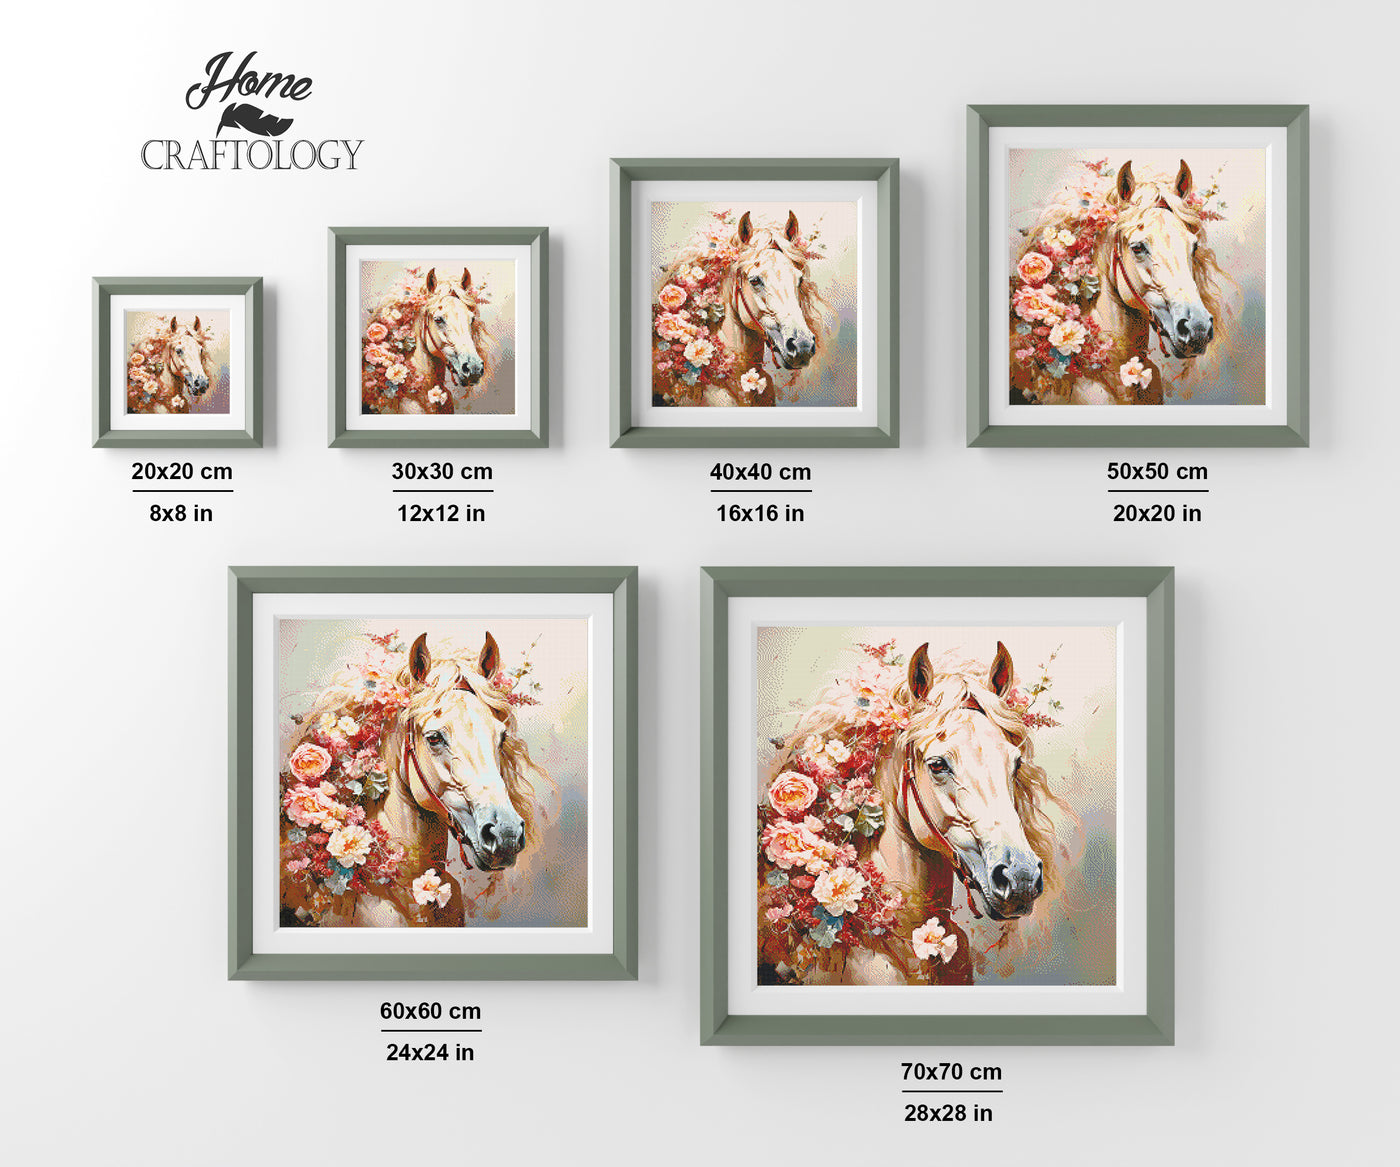 Horse with Pink Flowers - Premium Diamond Painting Kit